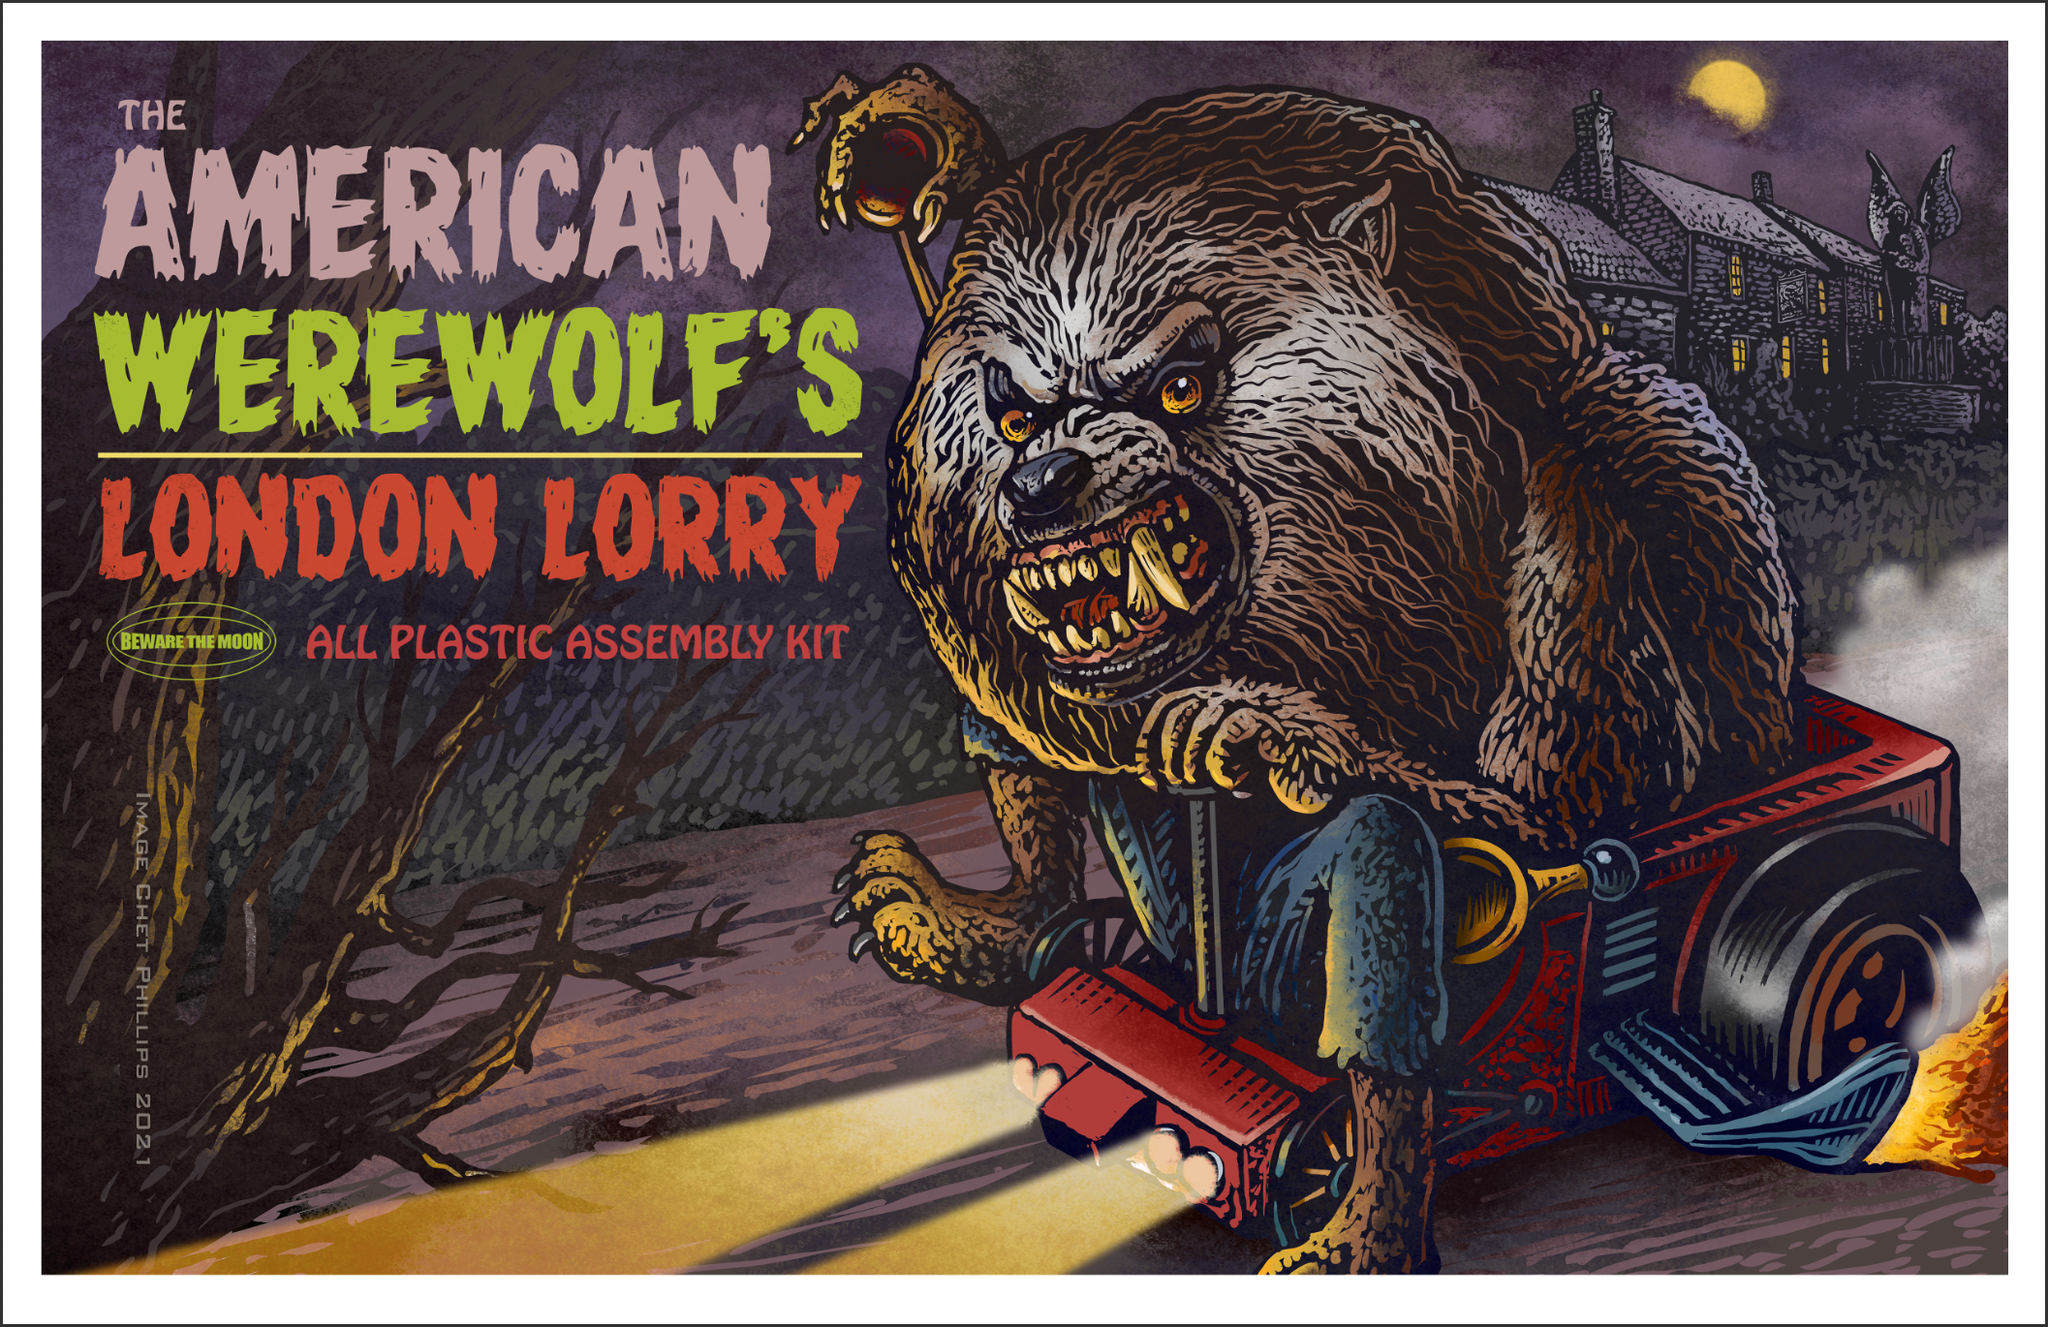 American Werewolf's London Lorry Model Box Art 11 x 17 limited edition print (50)